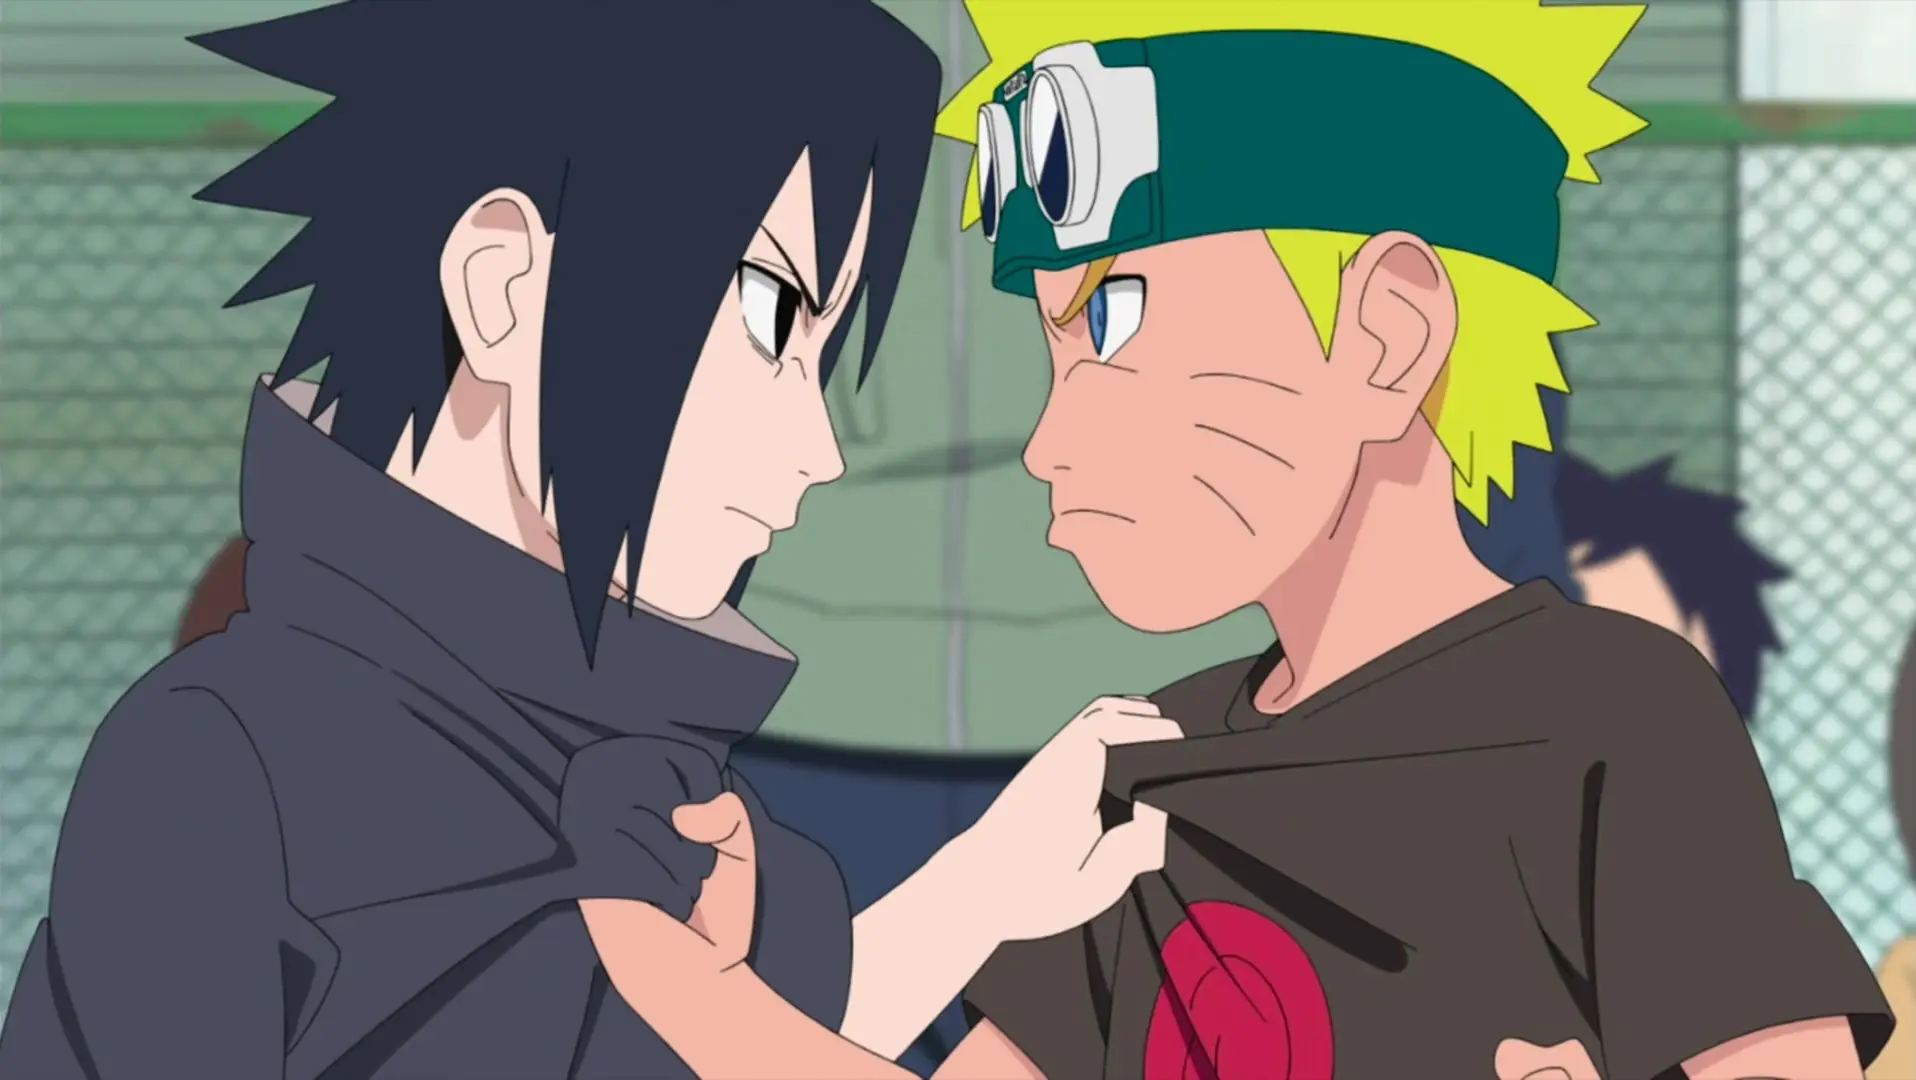 Naruto and Sasuke in the Naruto anime